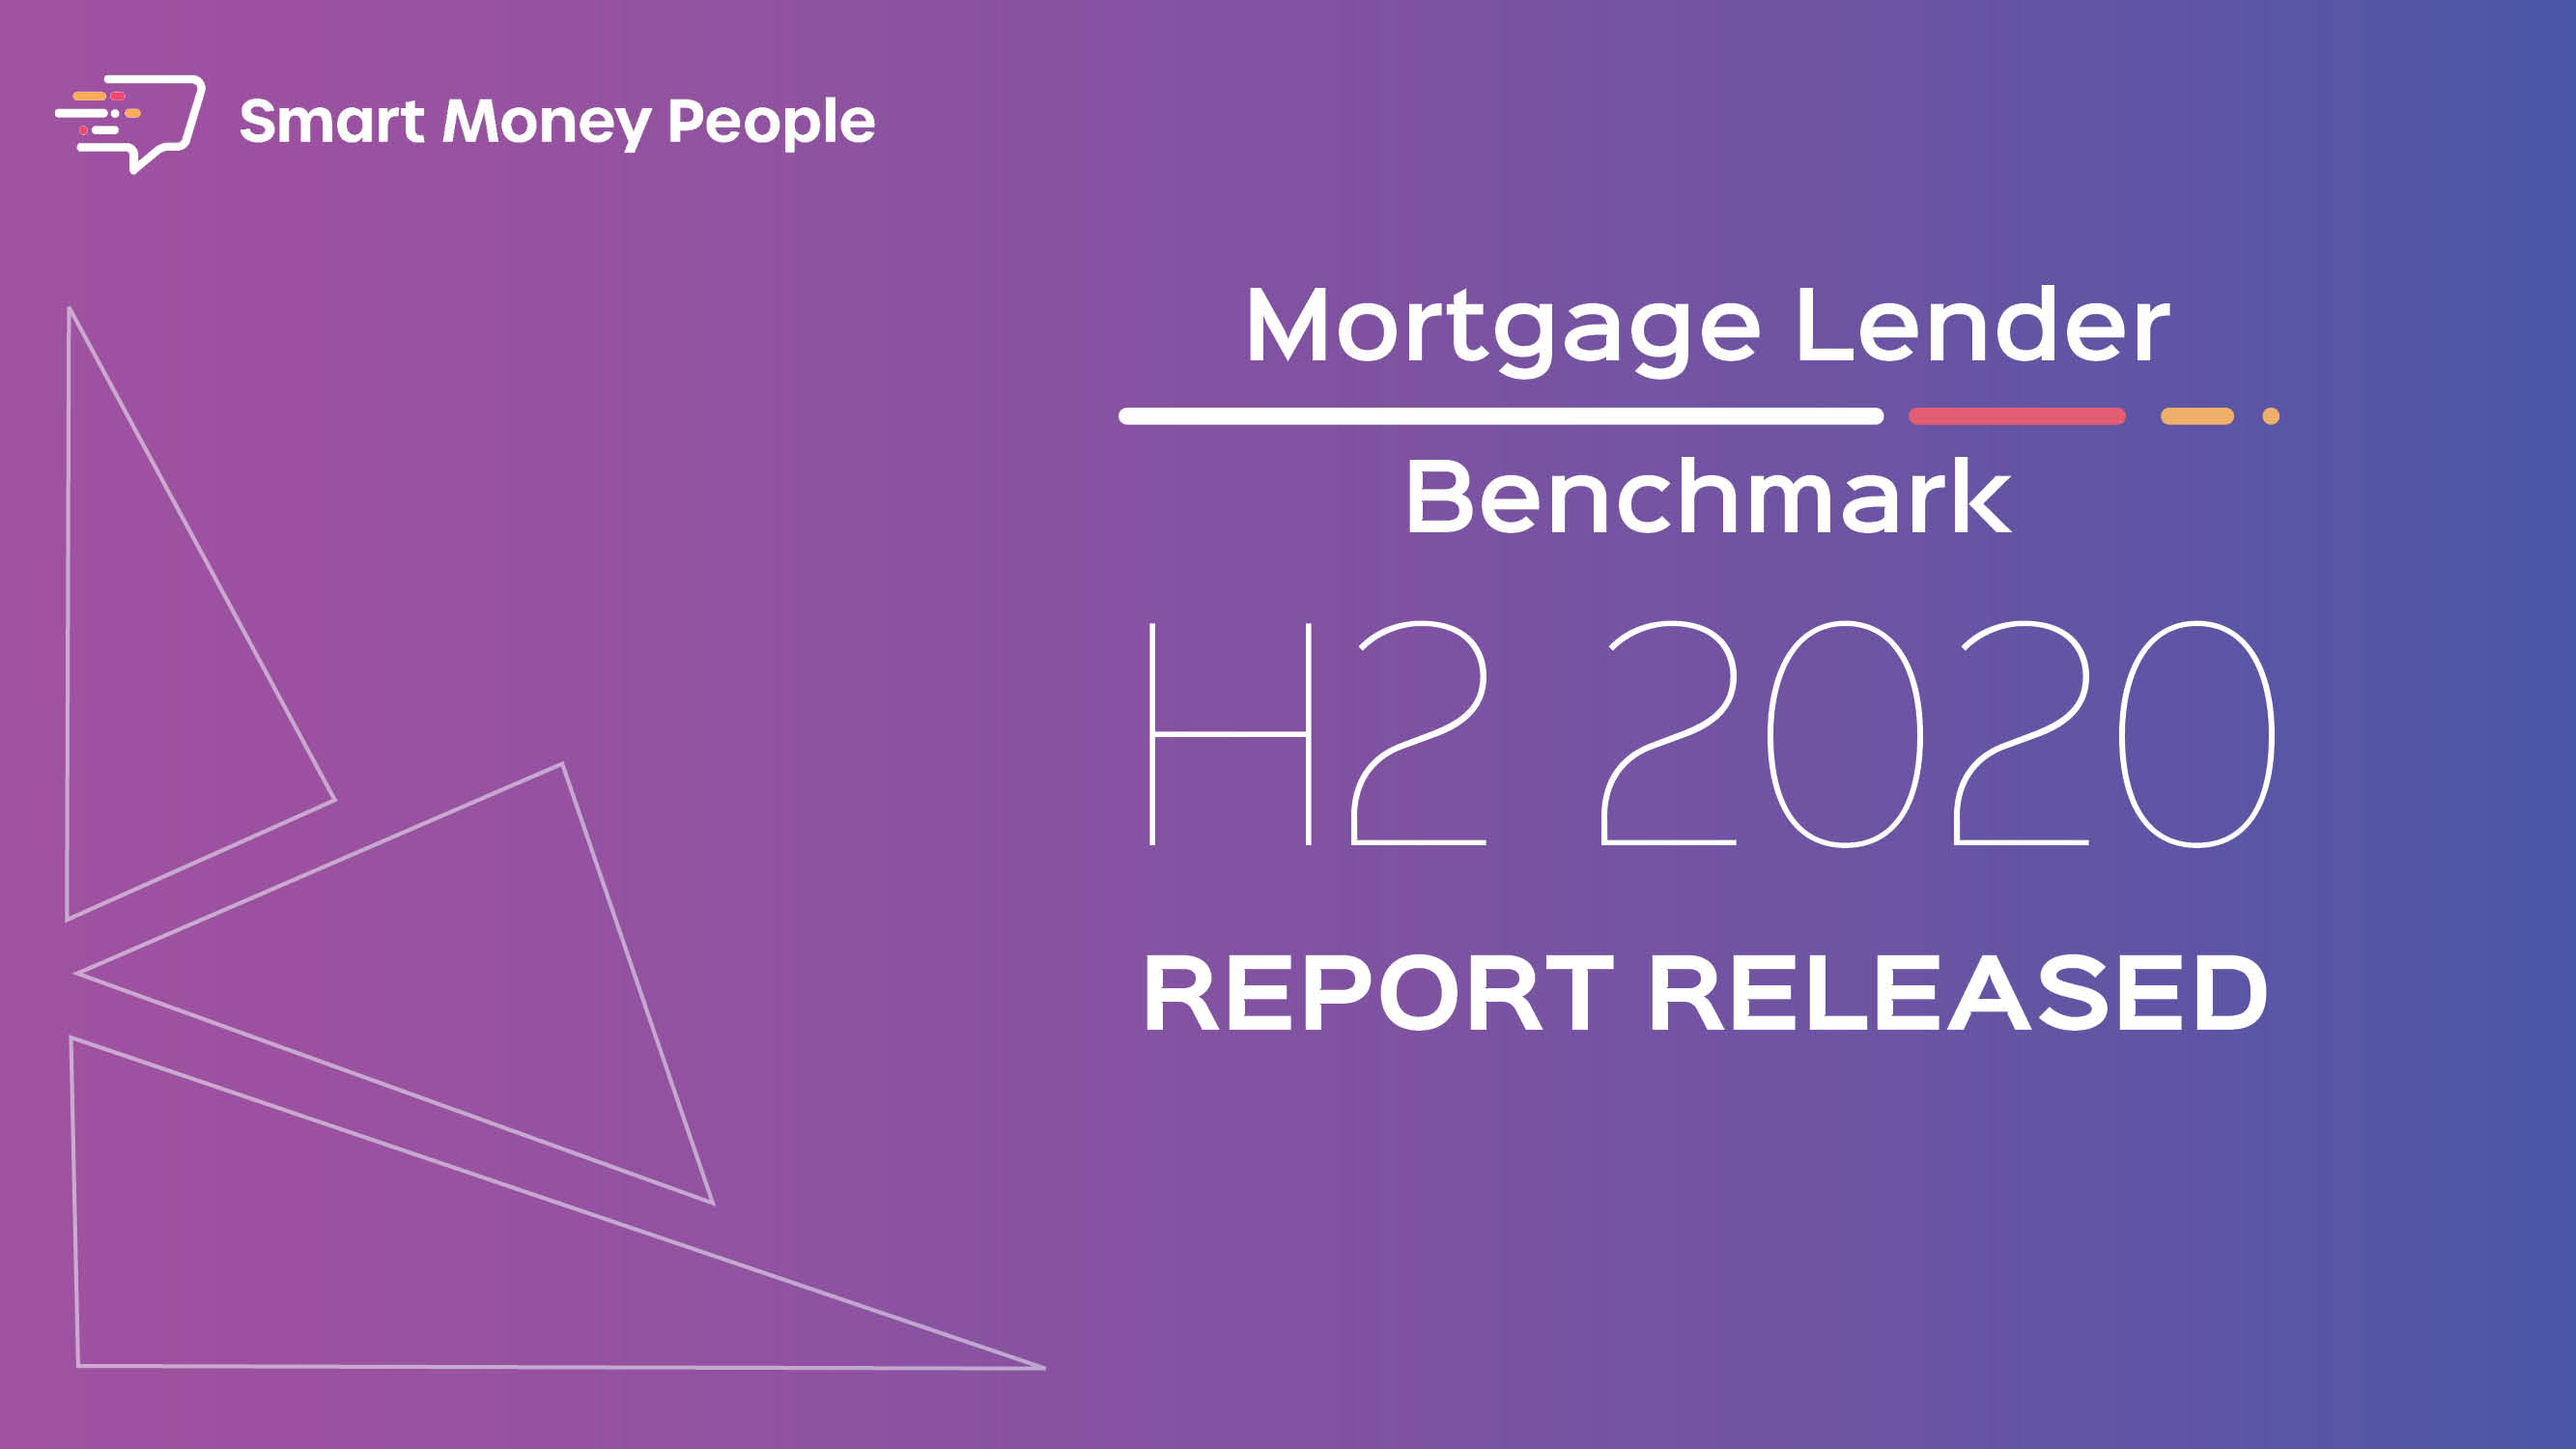 Mortgage Lender Benchmark H2 2020 Results - Broker Satisfaction has decreased